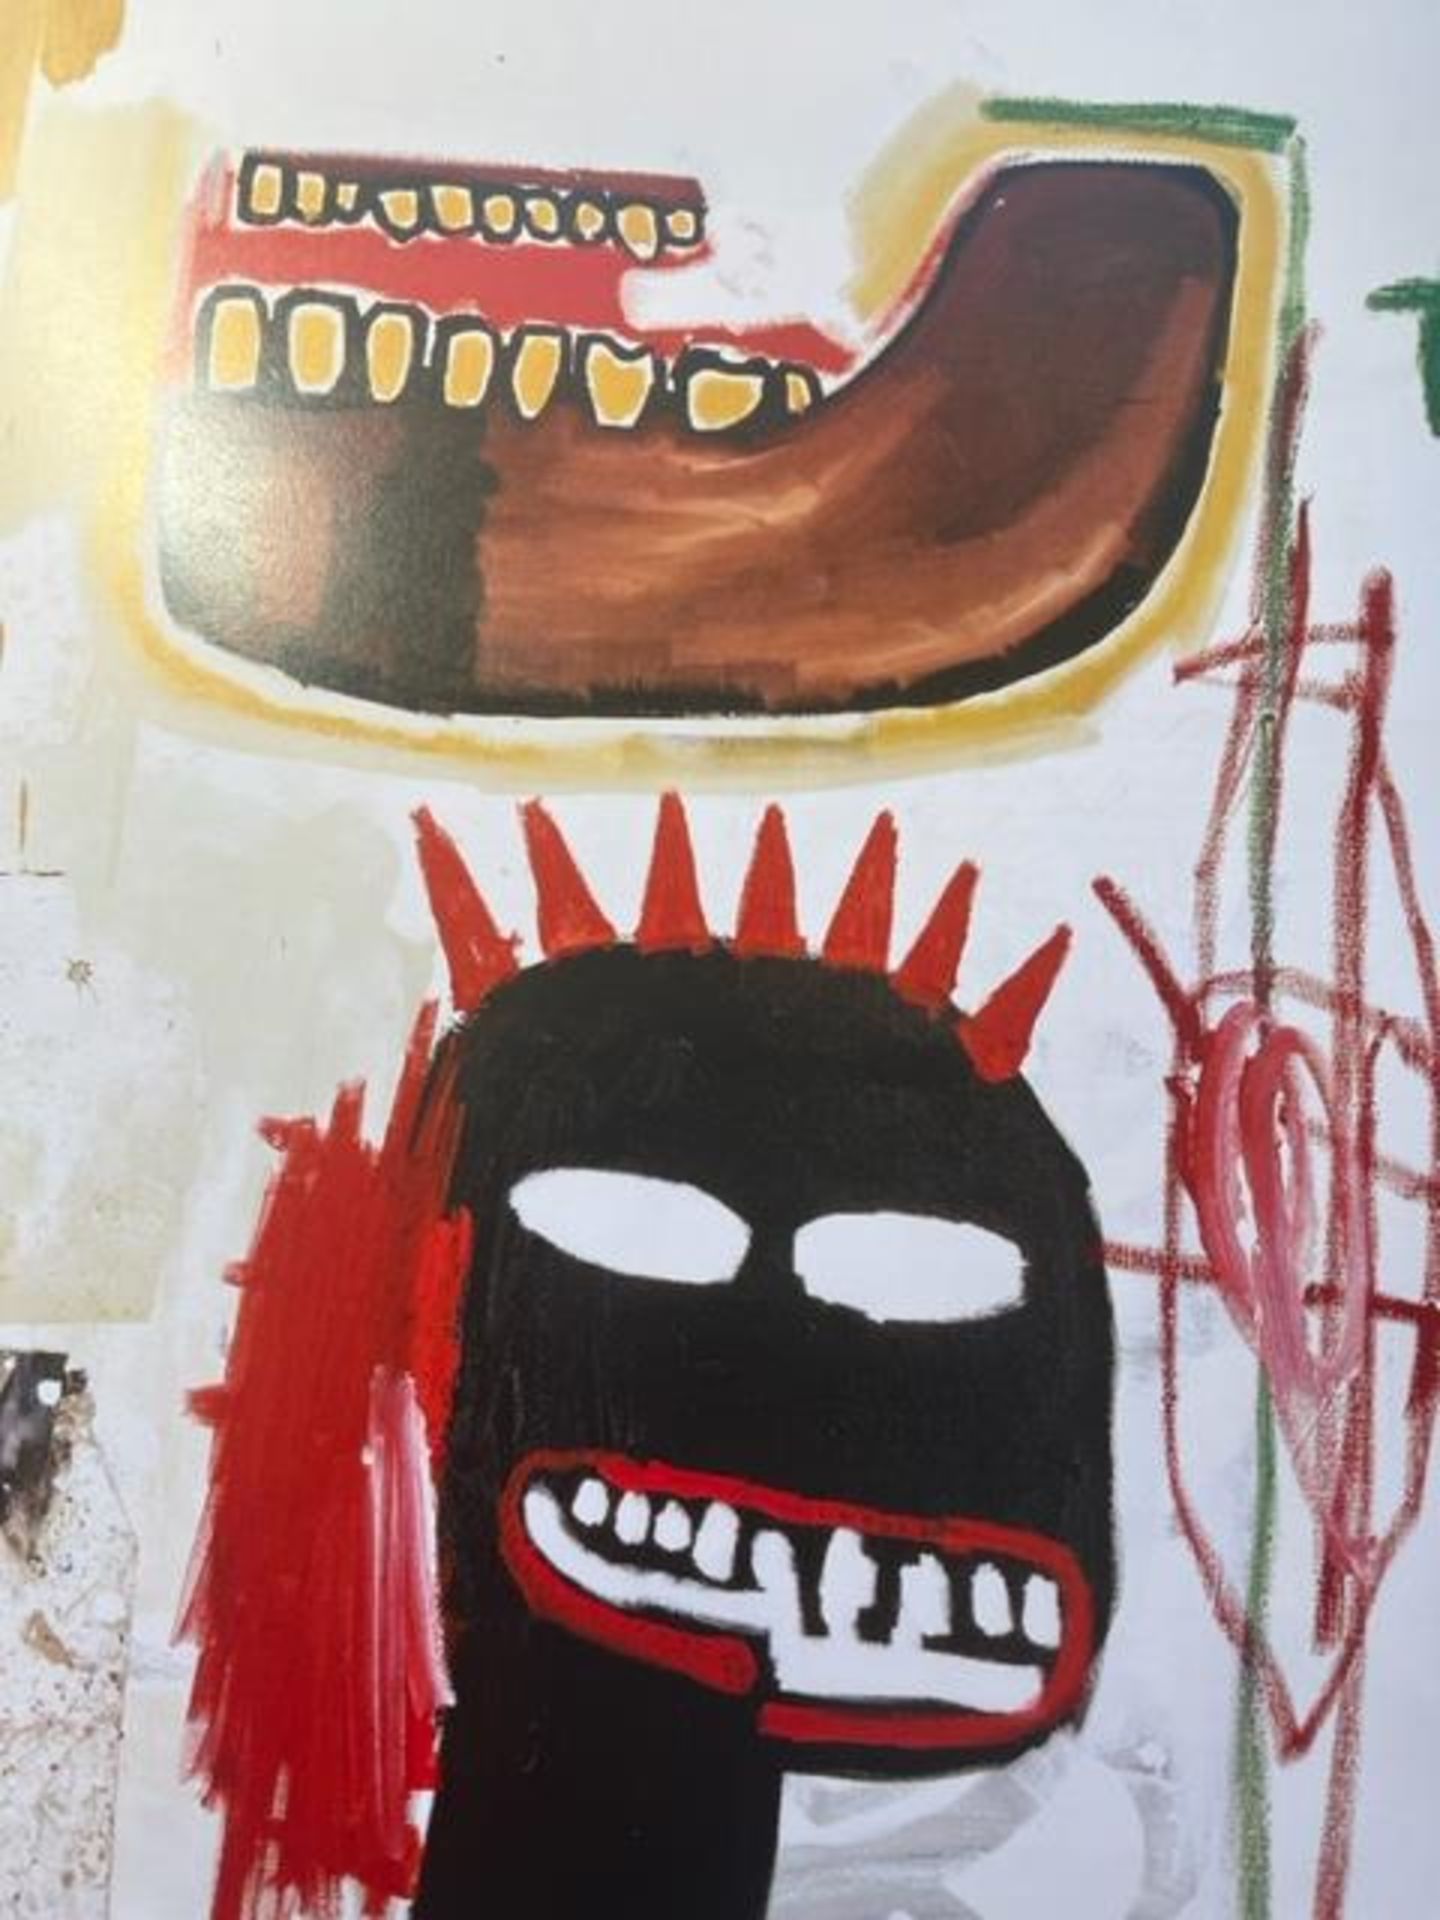 Jean-Michel Basquiat "Untitled" Print. - Image 2 of 6